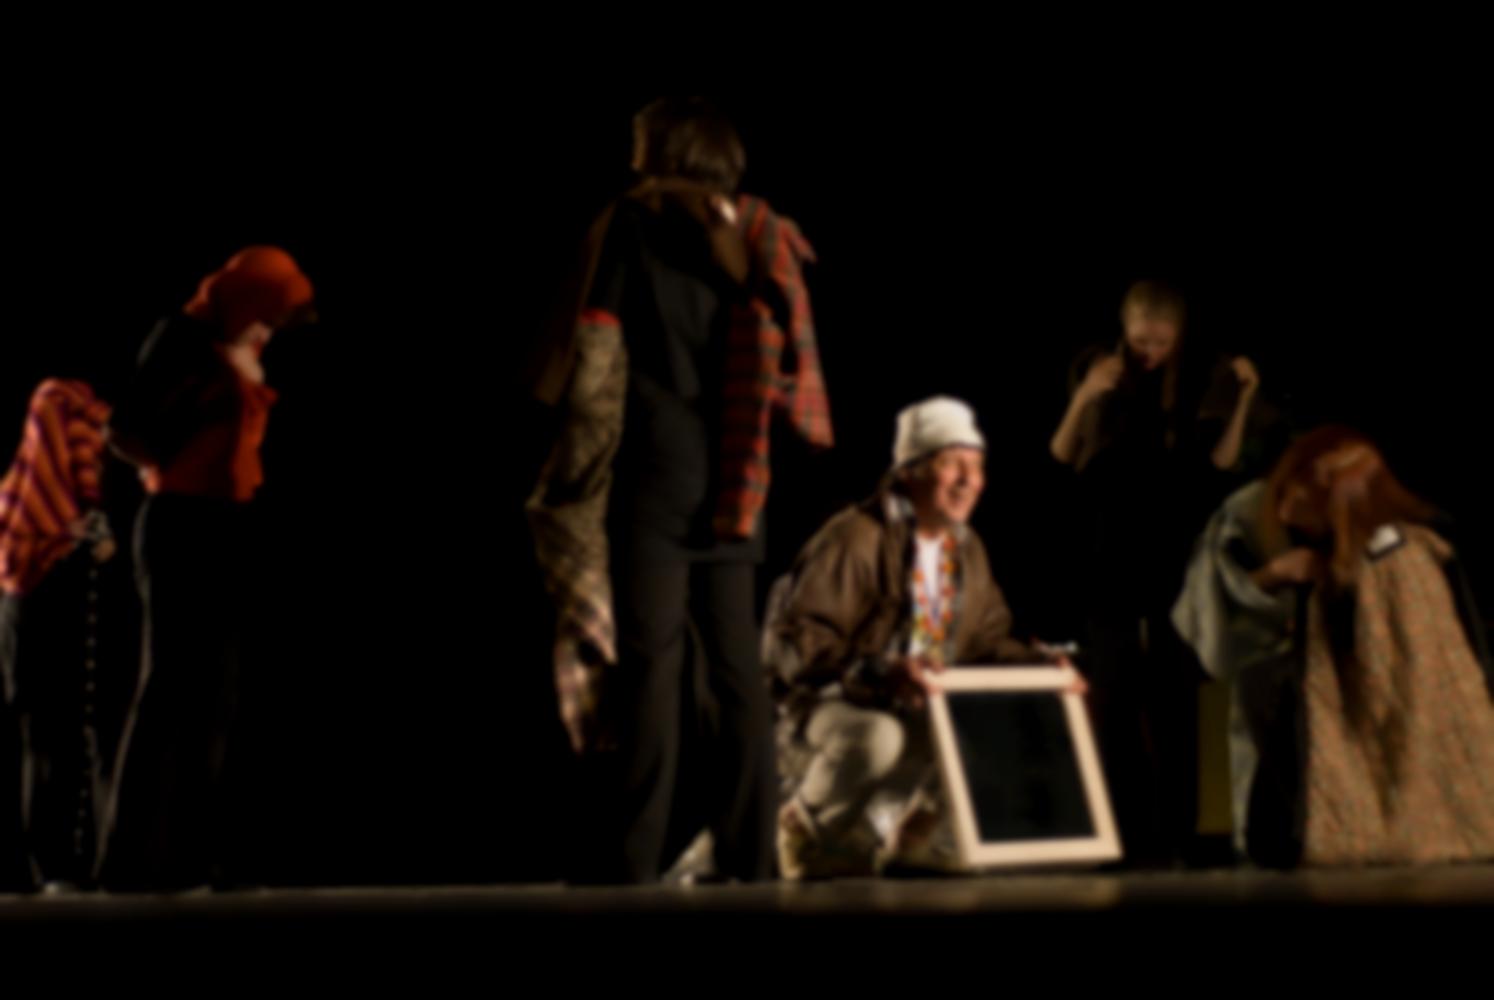 Accroupi parmi les choreutes qui déambulent vêtues de frippes, le clochard, l'air inspiré, tient un miroir. Nanterre, octobre 2009.